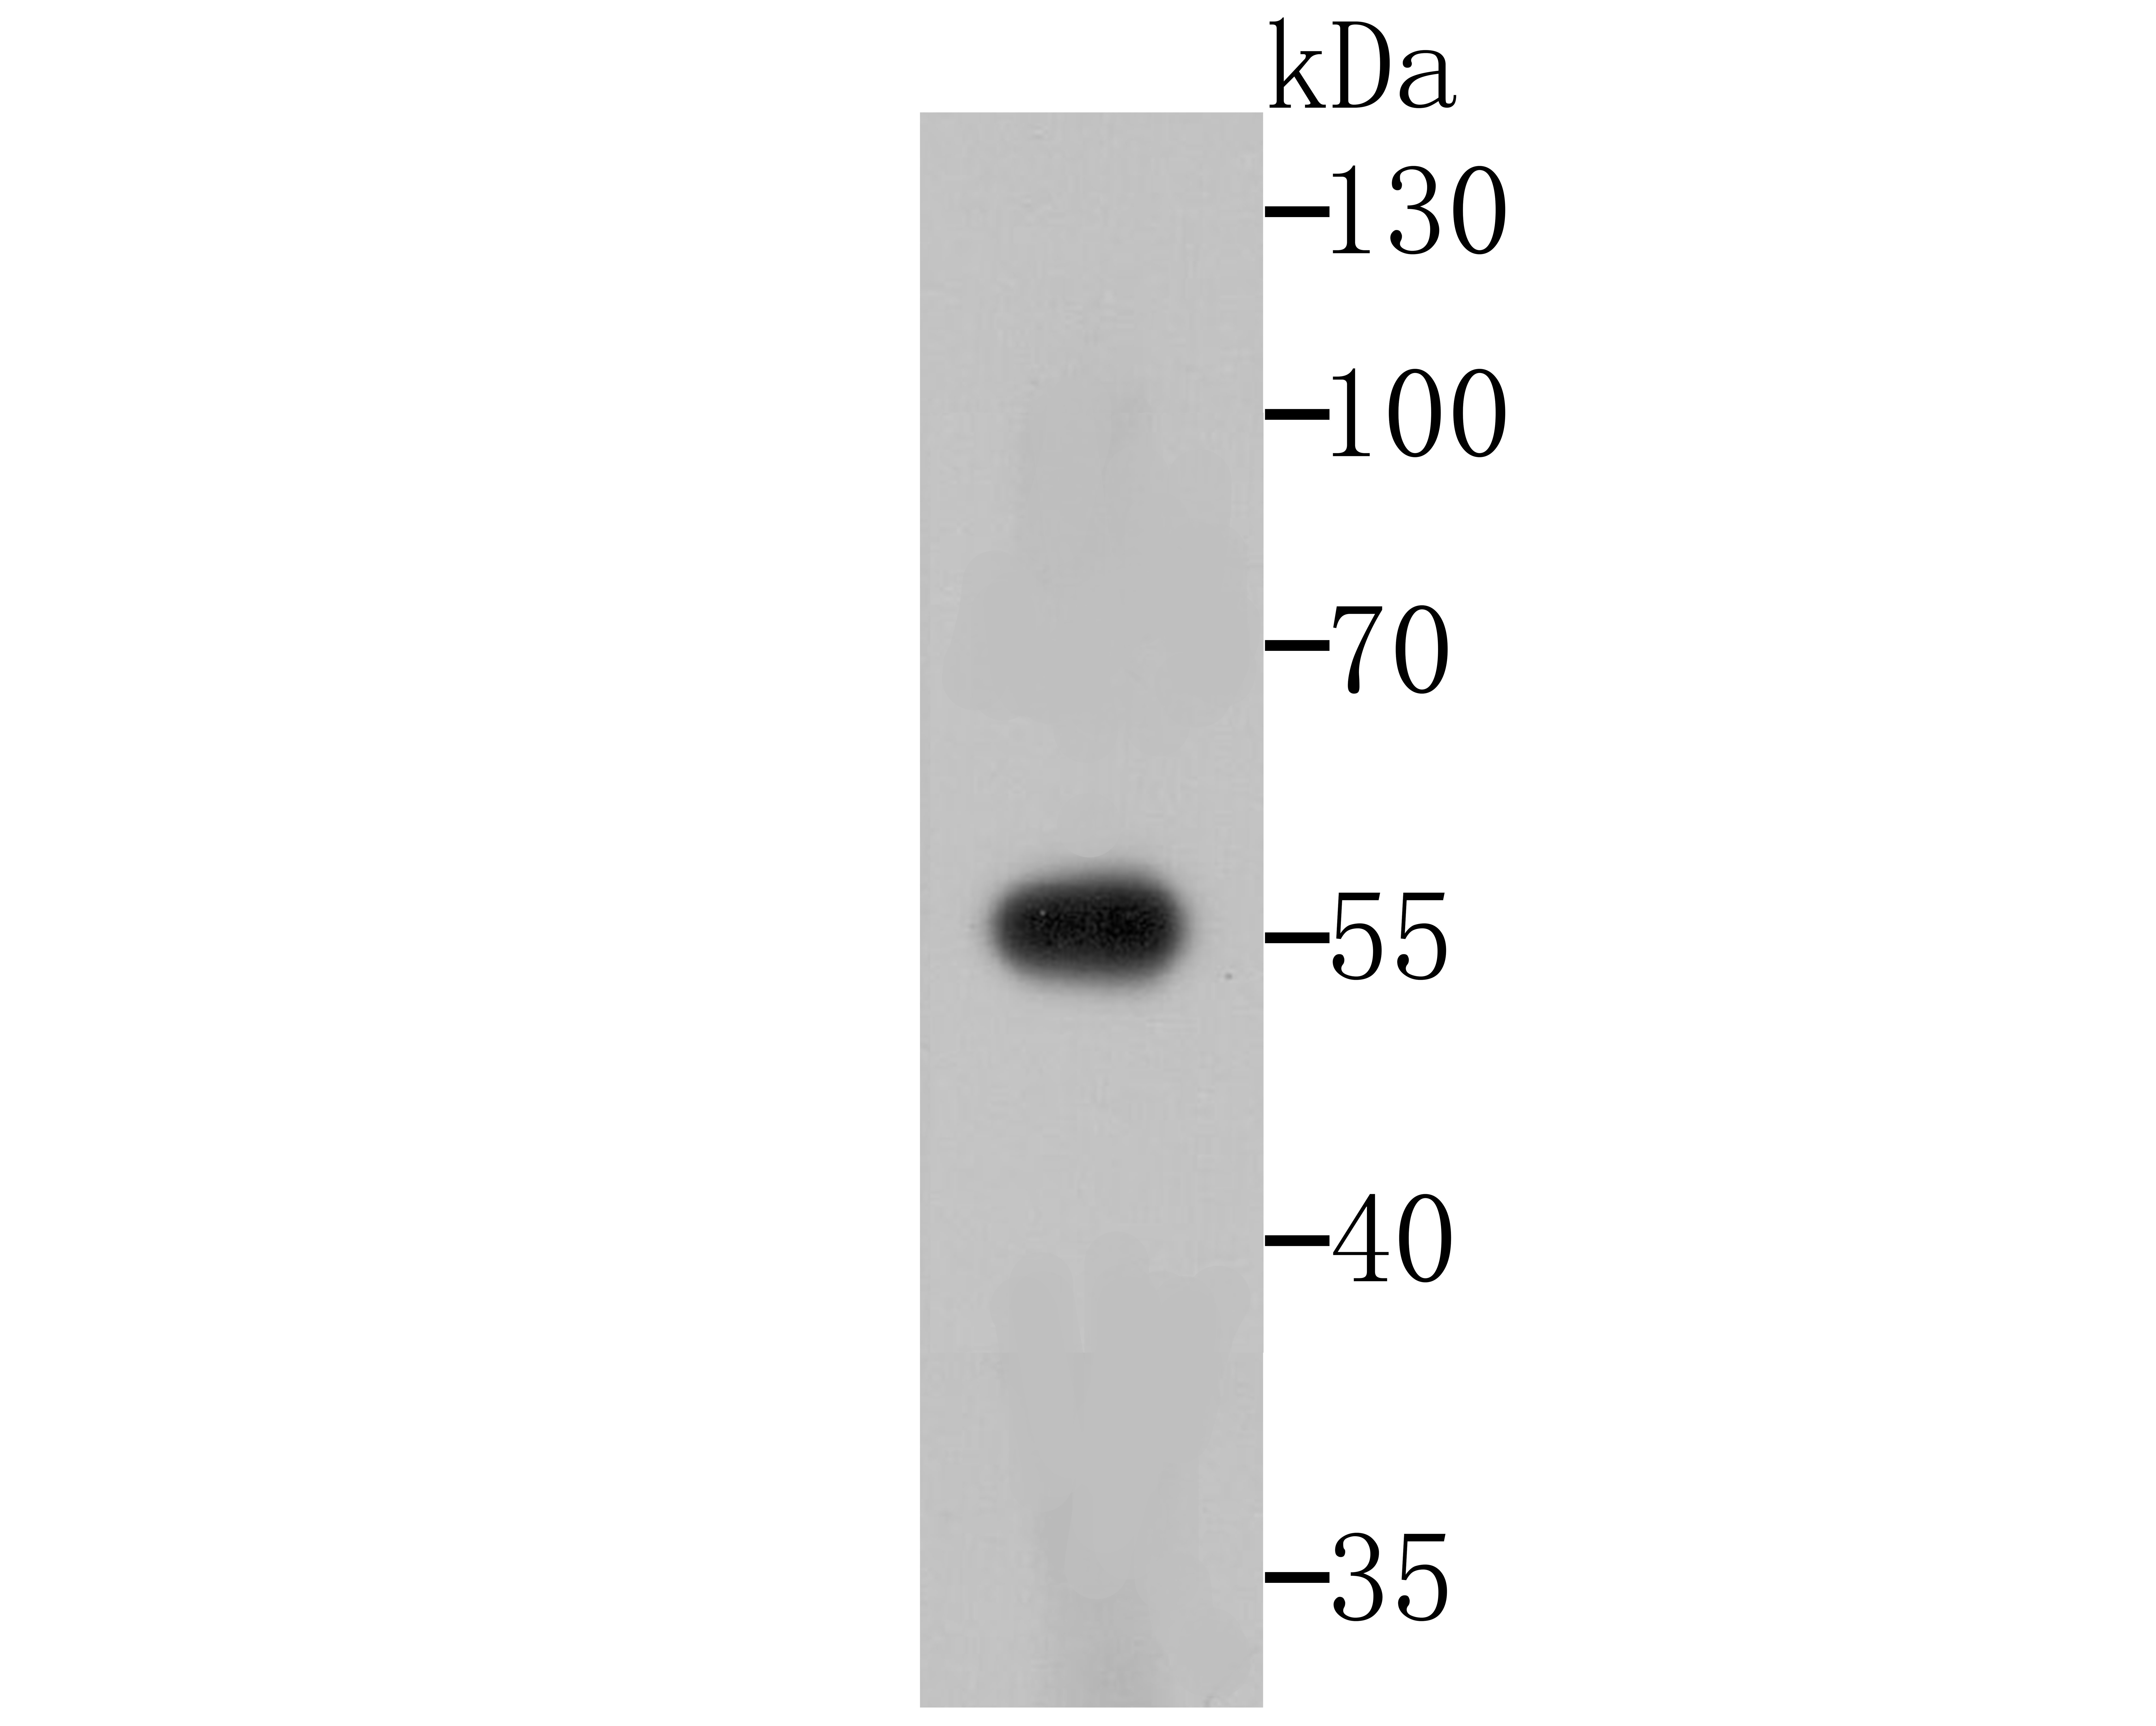 USP14 Antibody in Western Blot (WB)